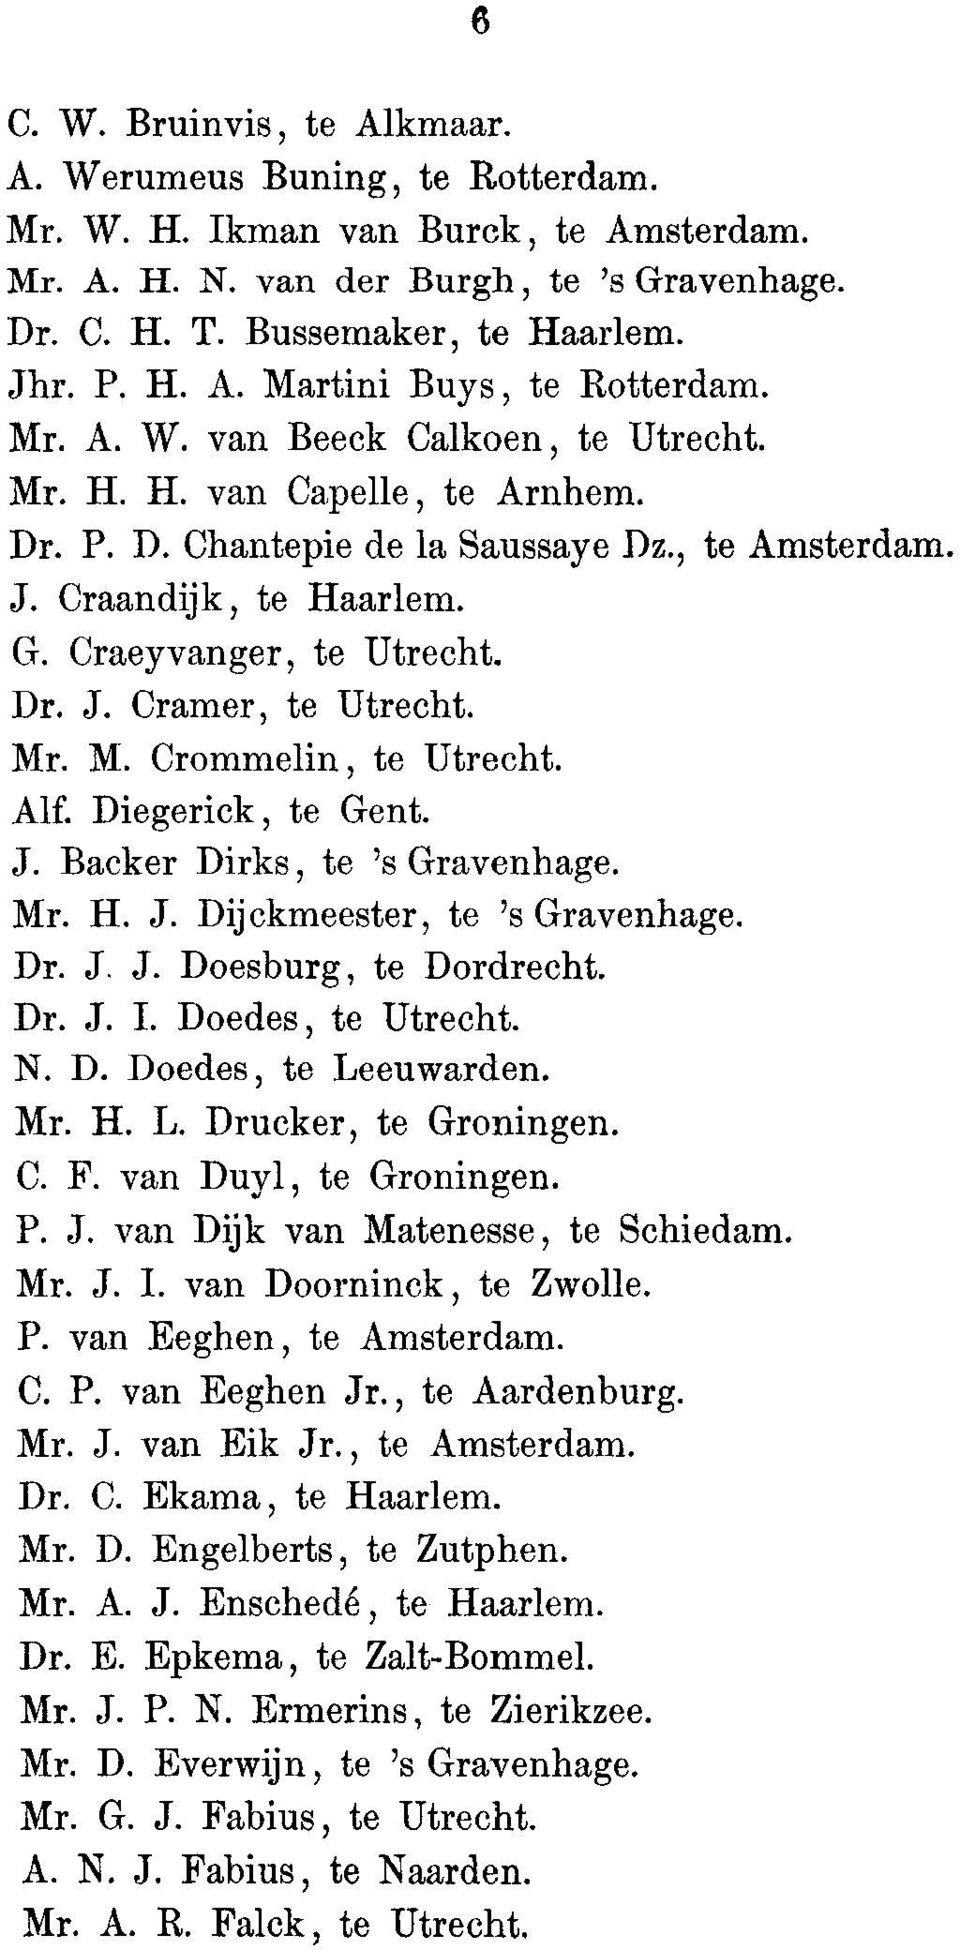 Mr. M. Crommelin, to Utrecht. Alf. Diegerick, to Gent. J. Backer Dirks, to 's Gravenhage. Mr. H. J. Dij ckmeester, to 's Gravenhage. Dr. J. J. Doesburg, to Dordrecht. Dr. J. I. Doedes, to Utrecht. N.